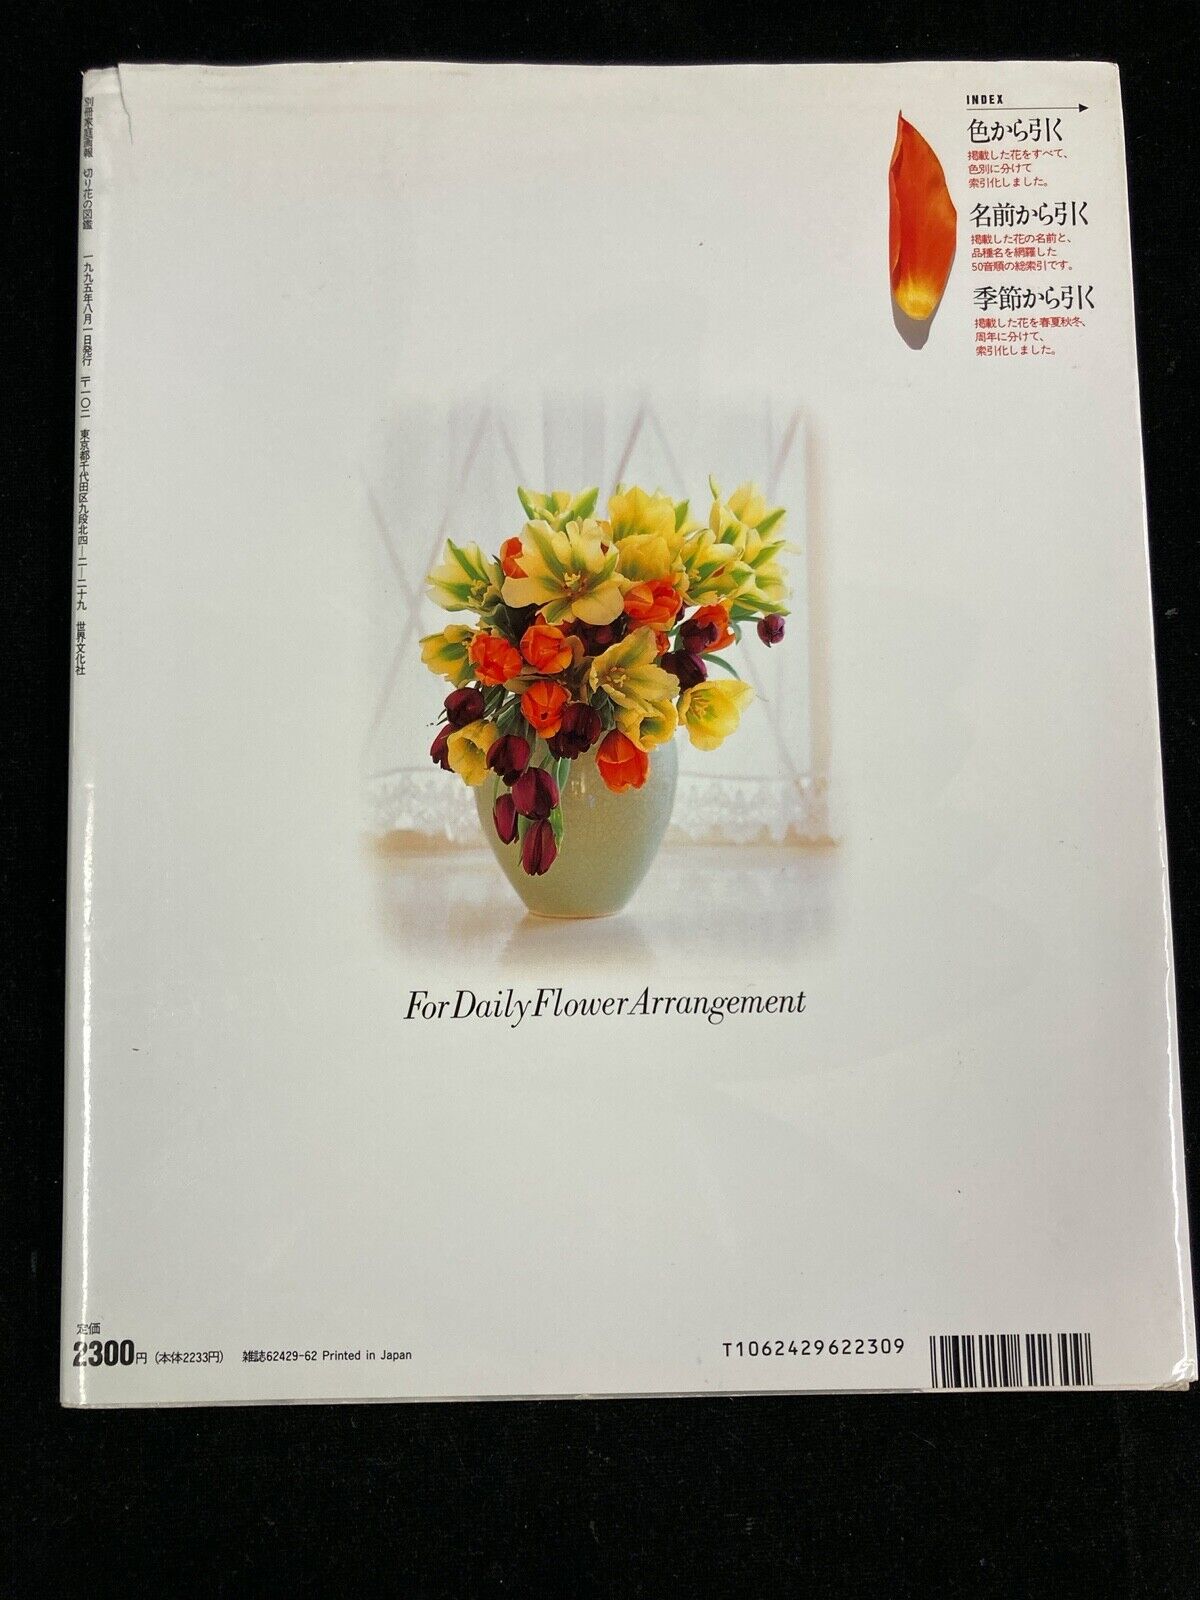 For Daily Flower Arrangement - Japanese Language Illustrated Floral Catalog